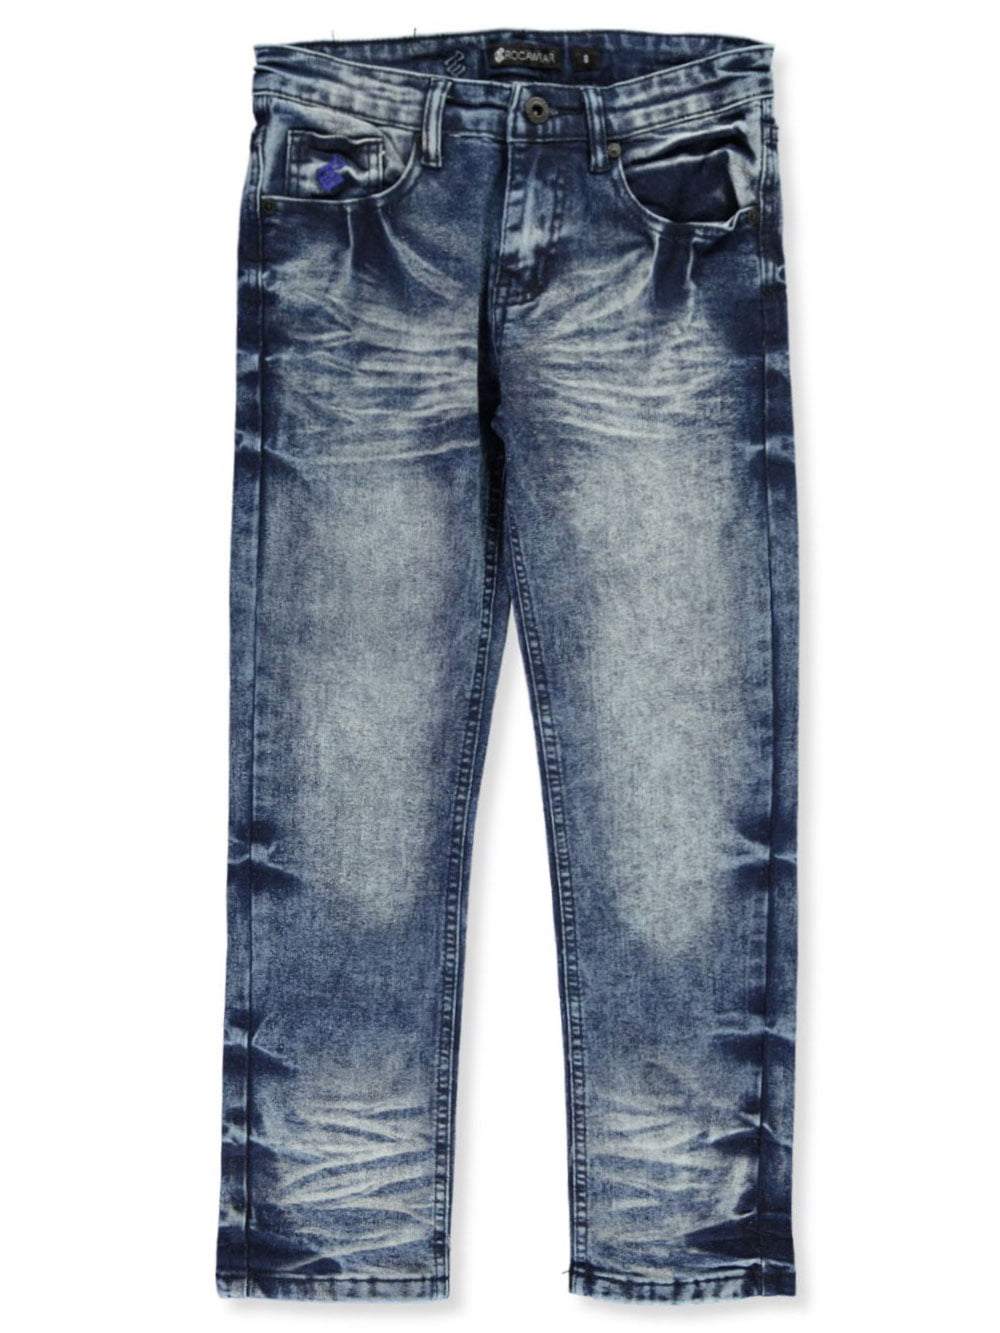 Rocawear - Rocawear Boys' Pocket Stitched Jeans - Walmart.com - Walmart.com